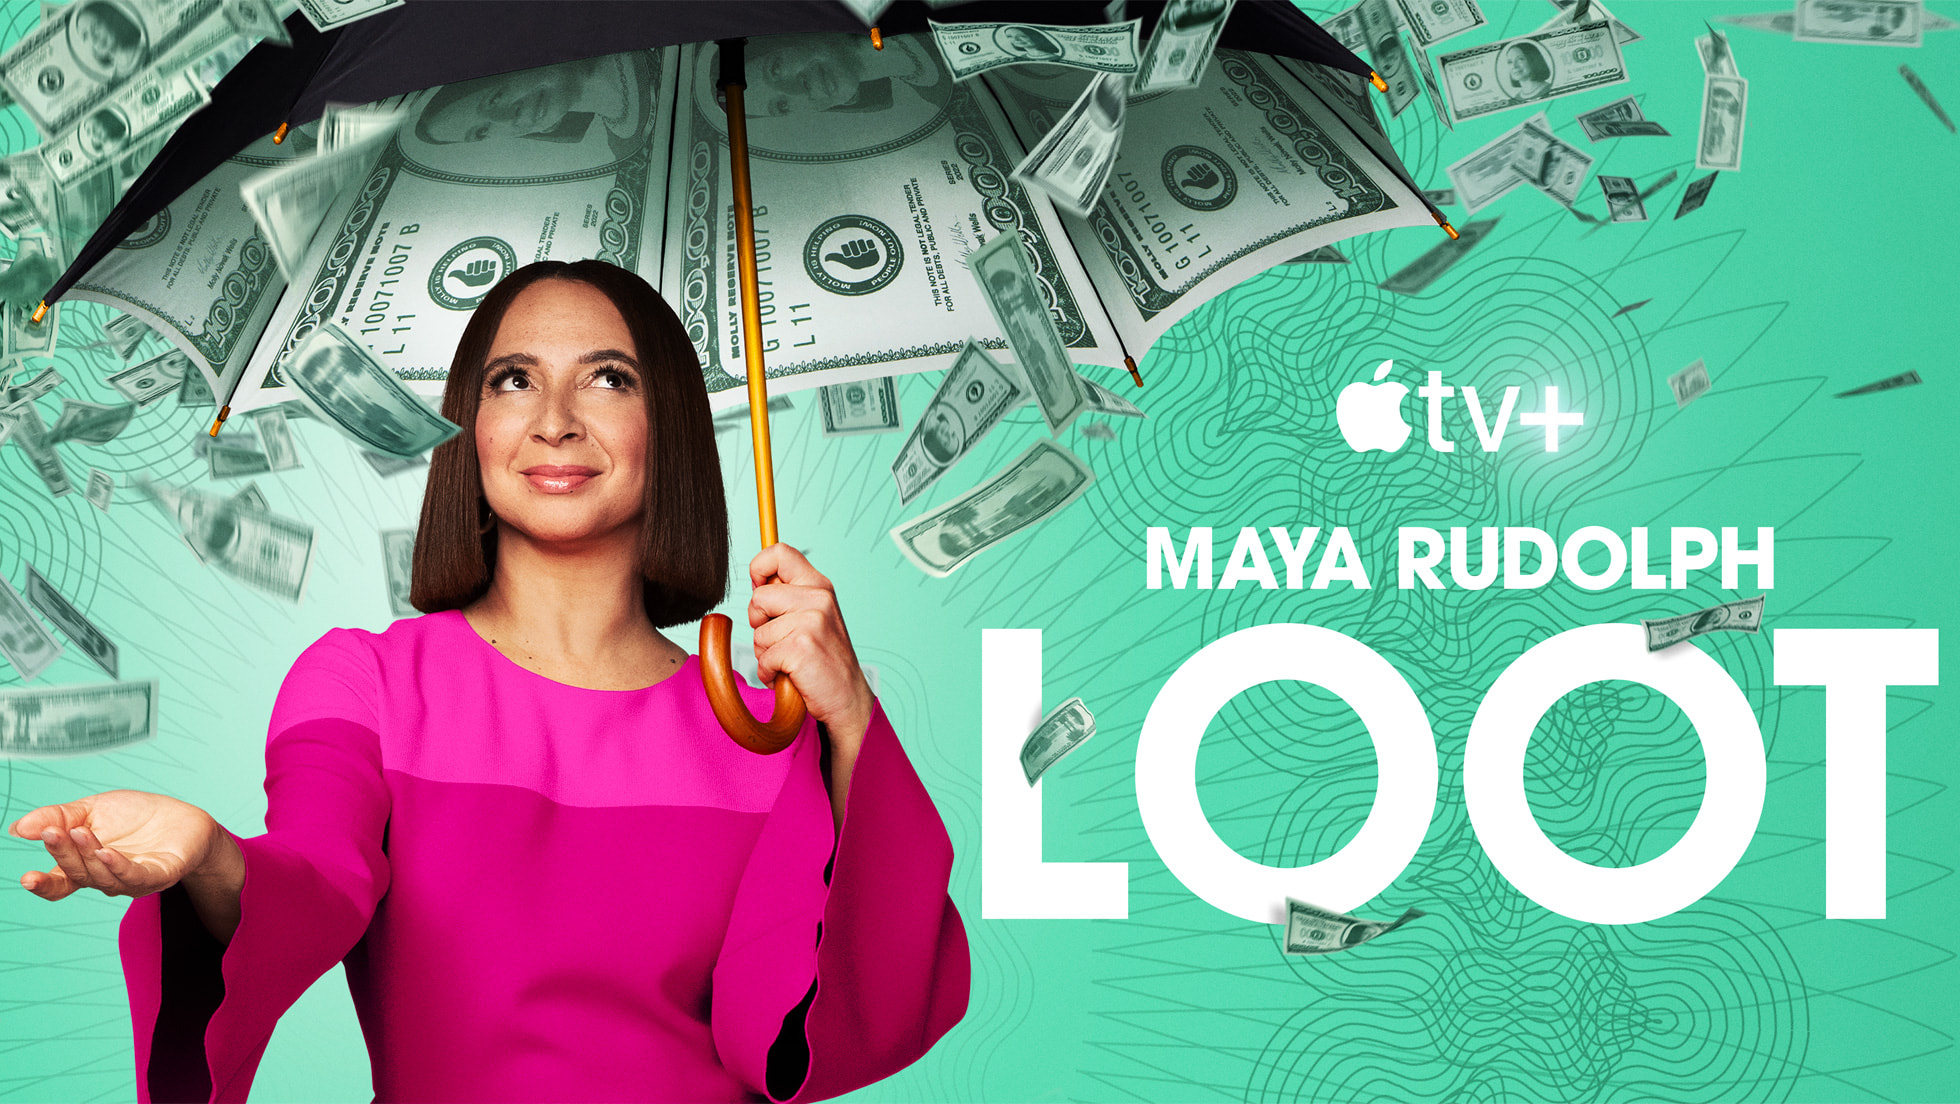 Apple Tv Debuts Trailer For New Workplace Comedy “loot Starring Emmy Award Winner Maya